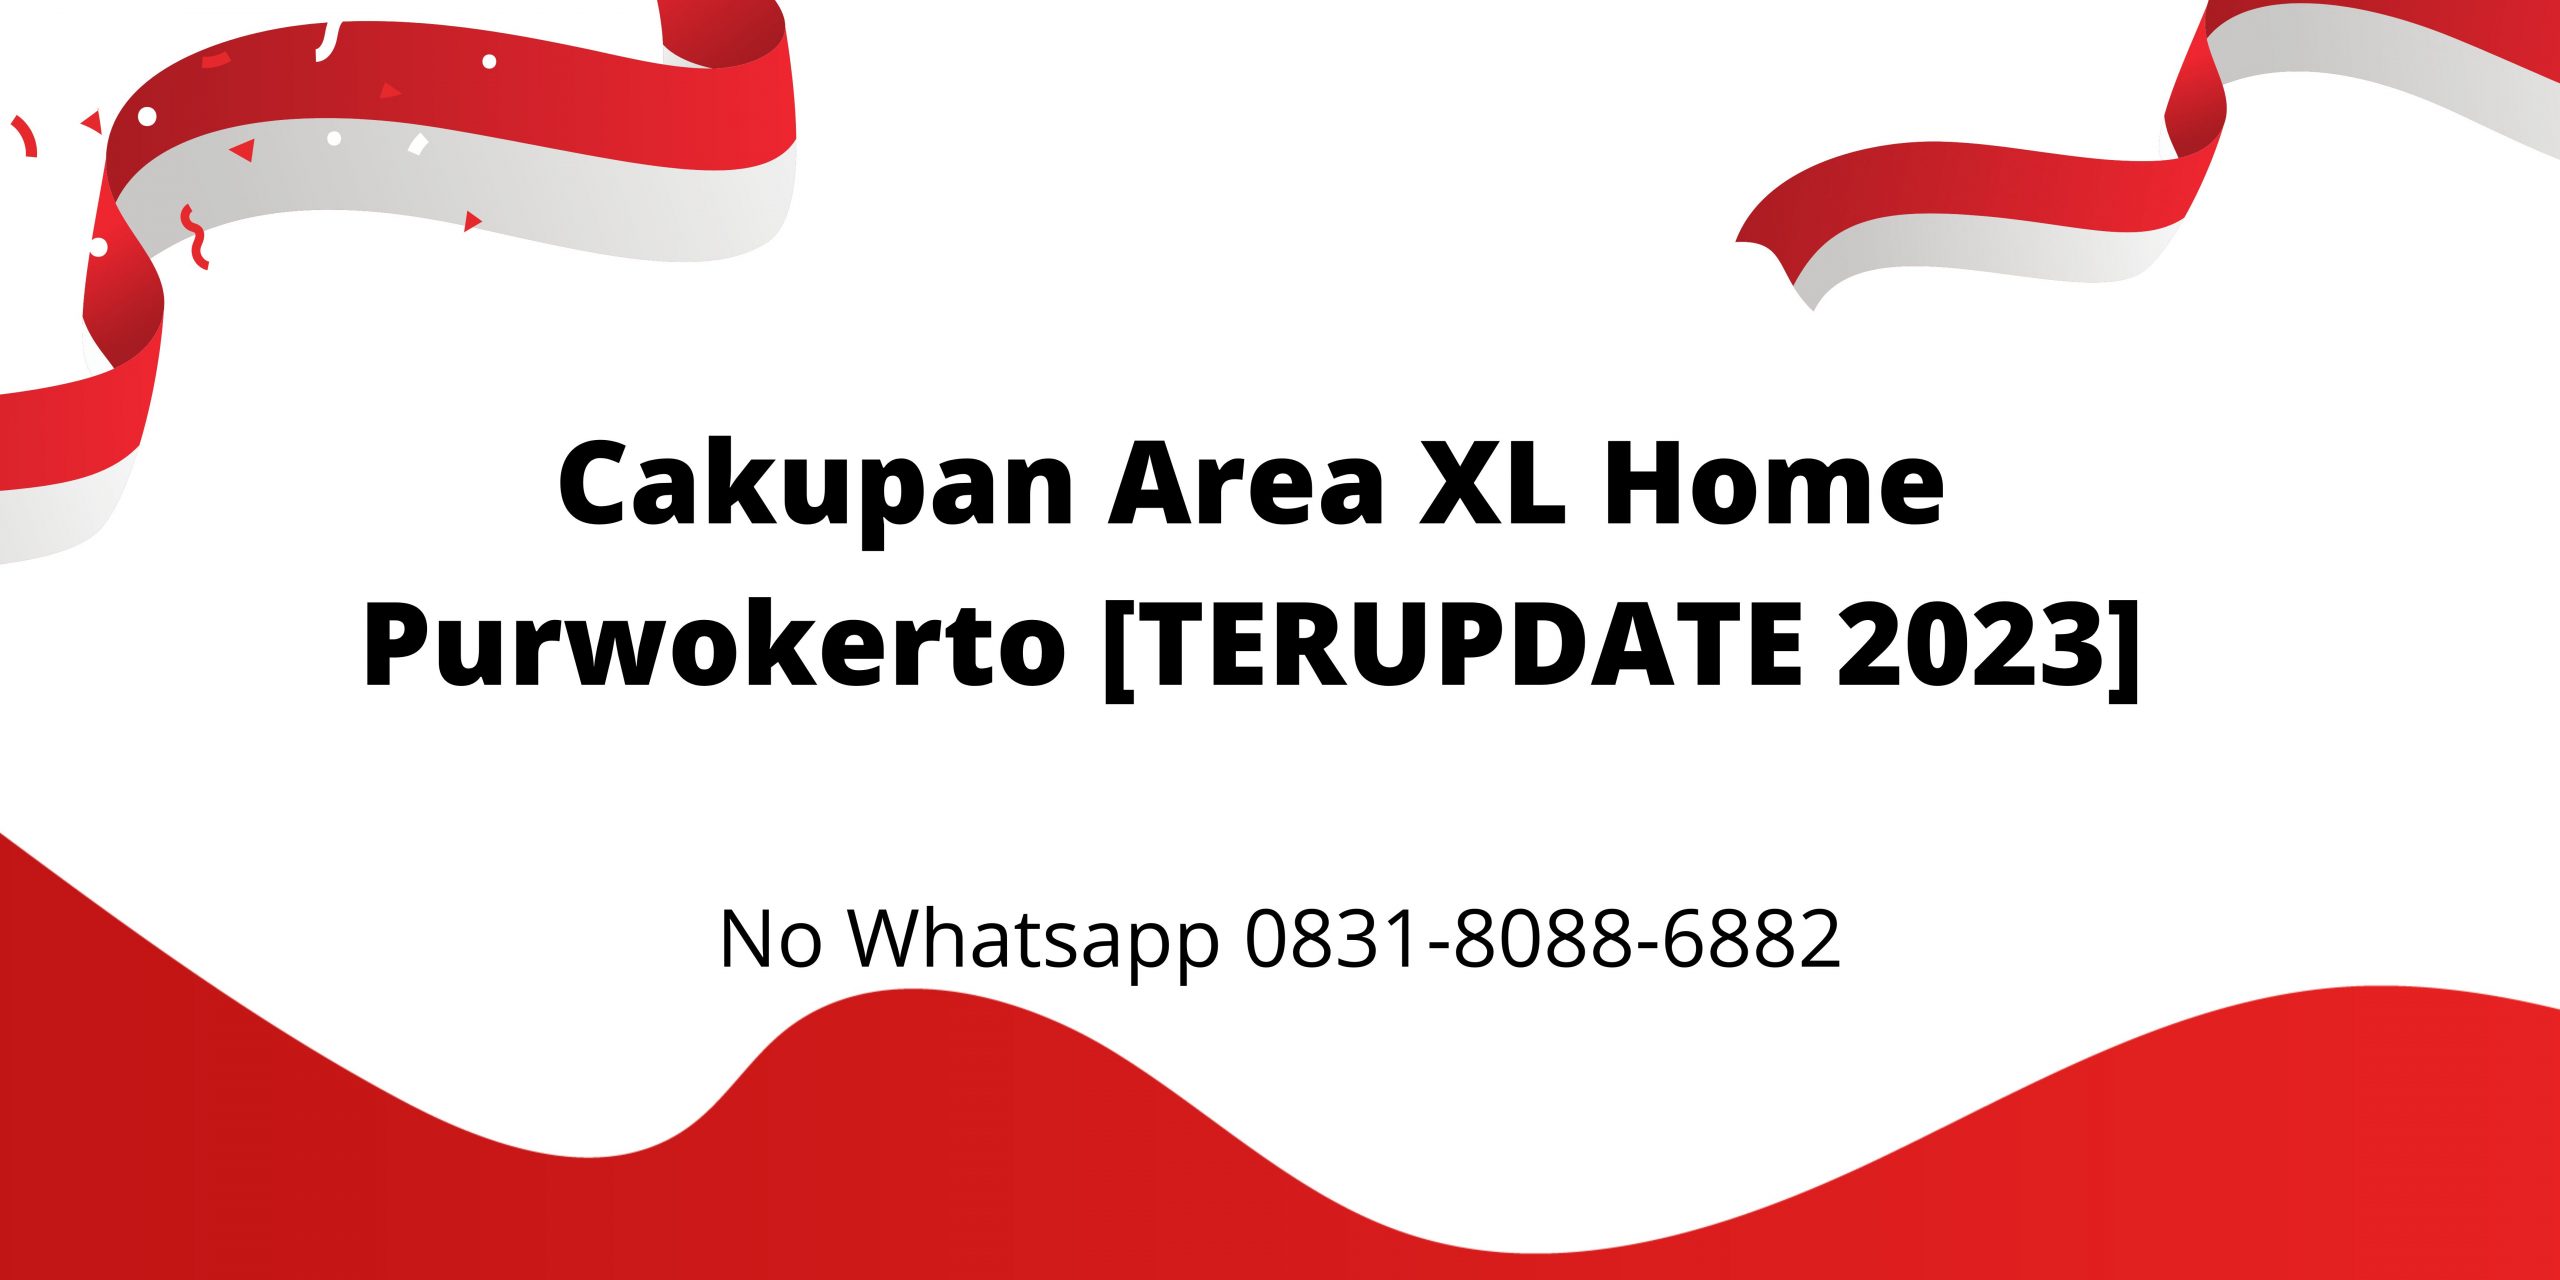 Cakupan Area XL Home Purwokerto